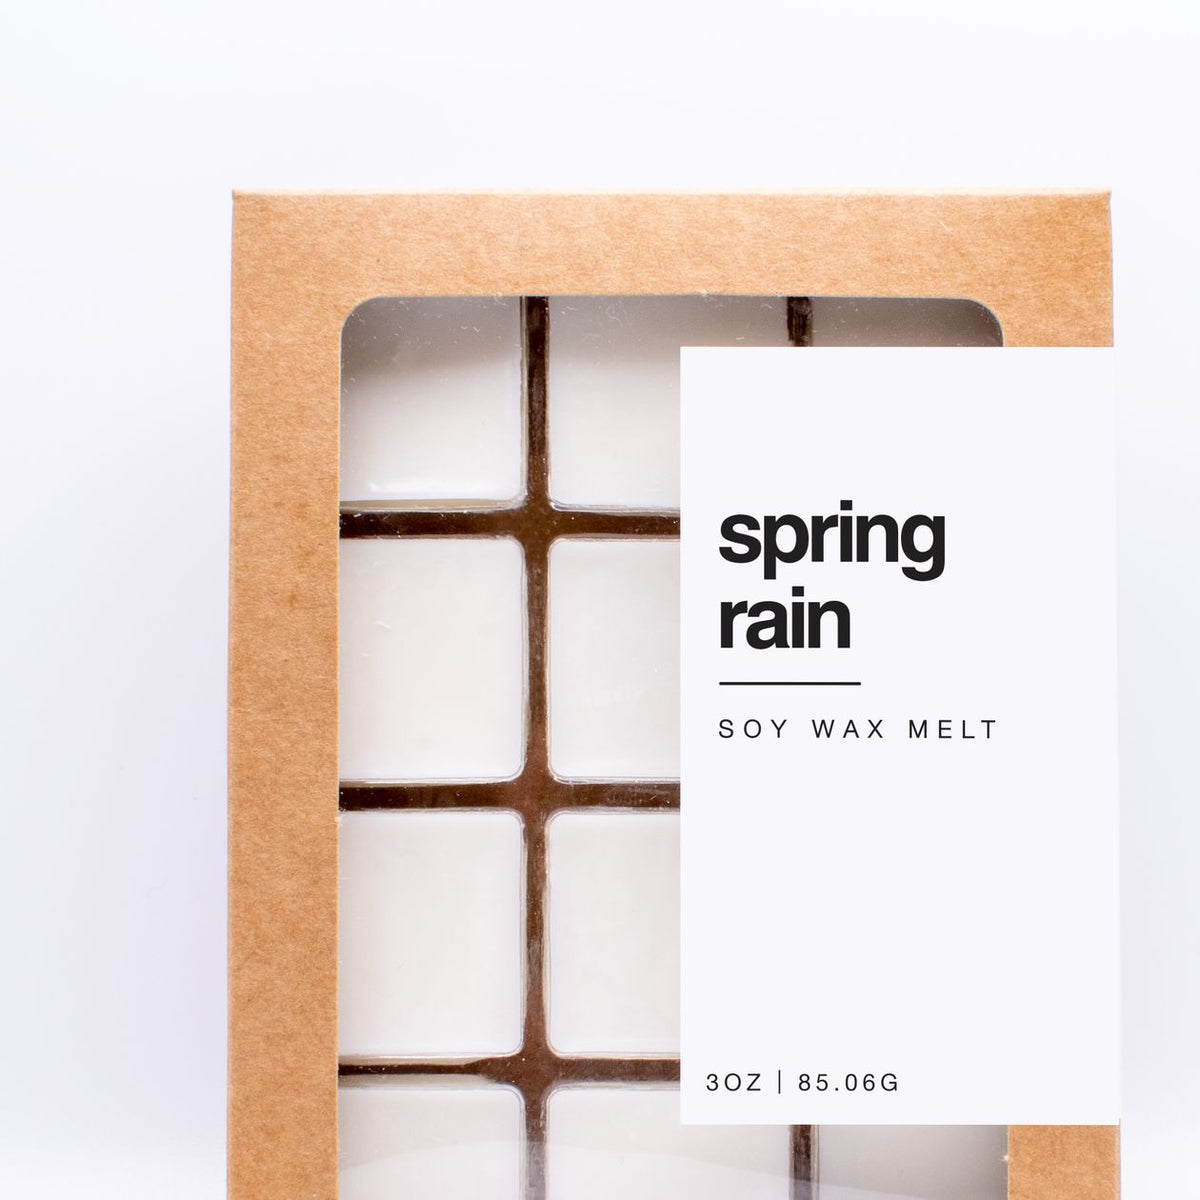 Soy Wax Melt - Spring Rain